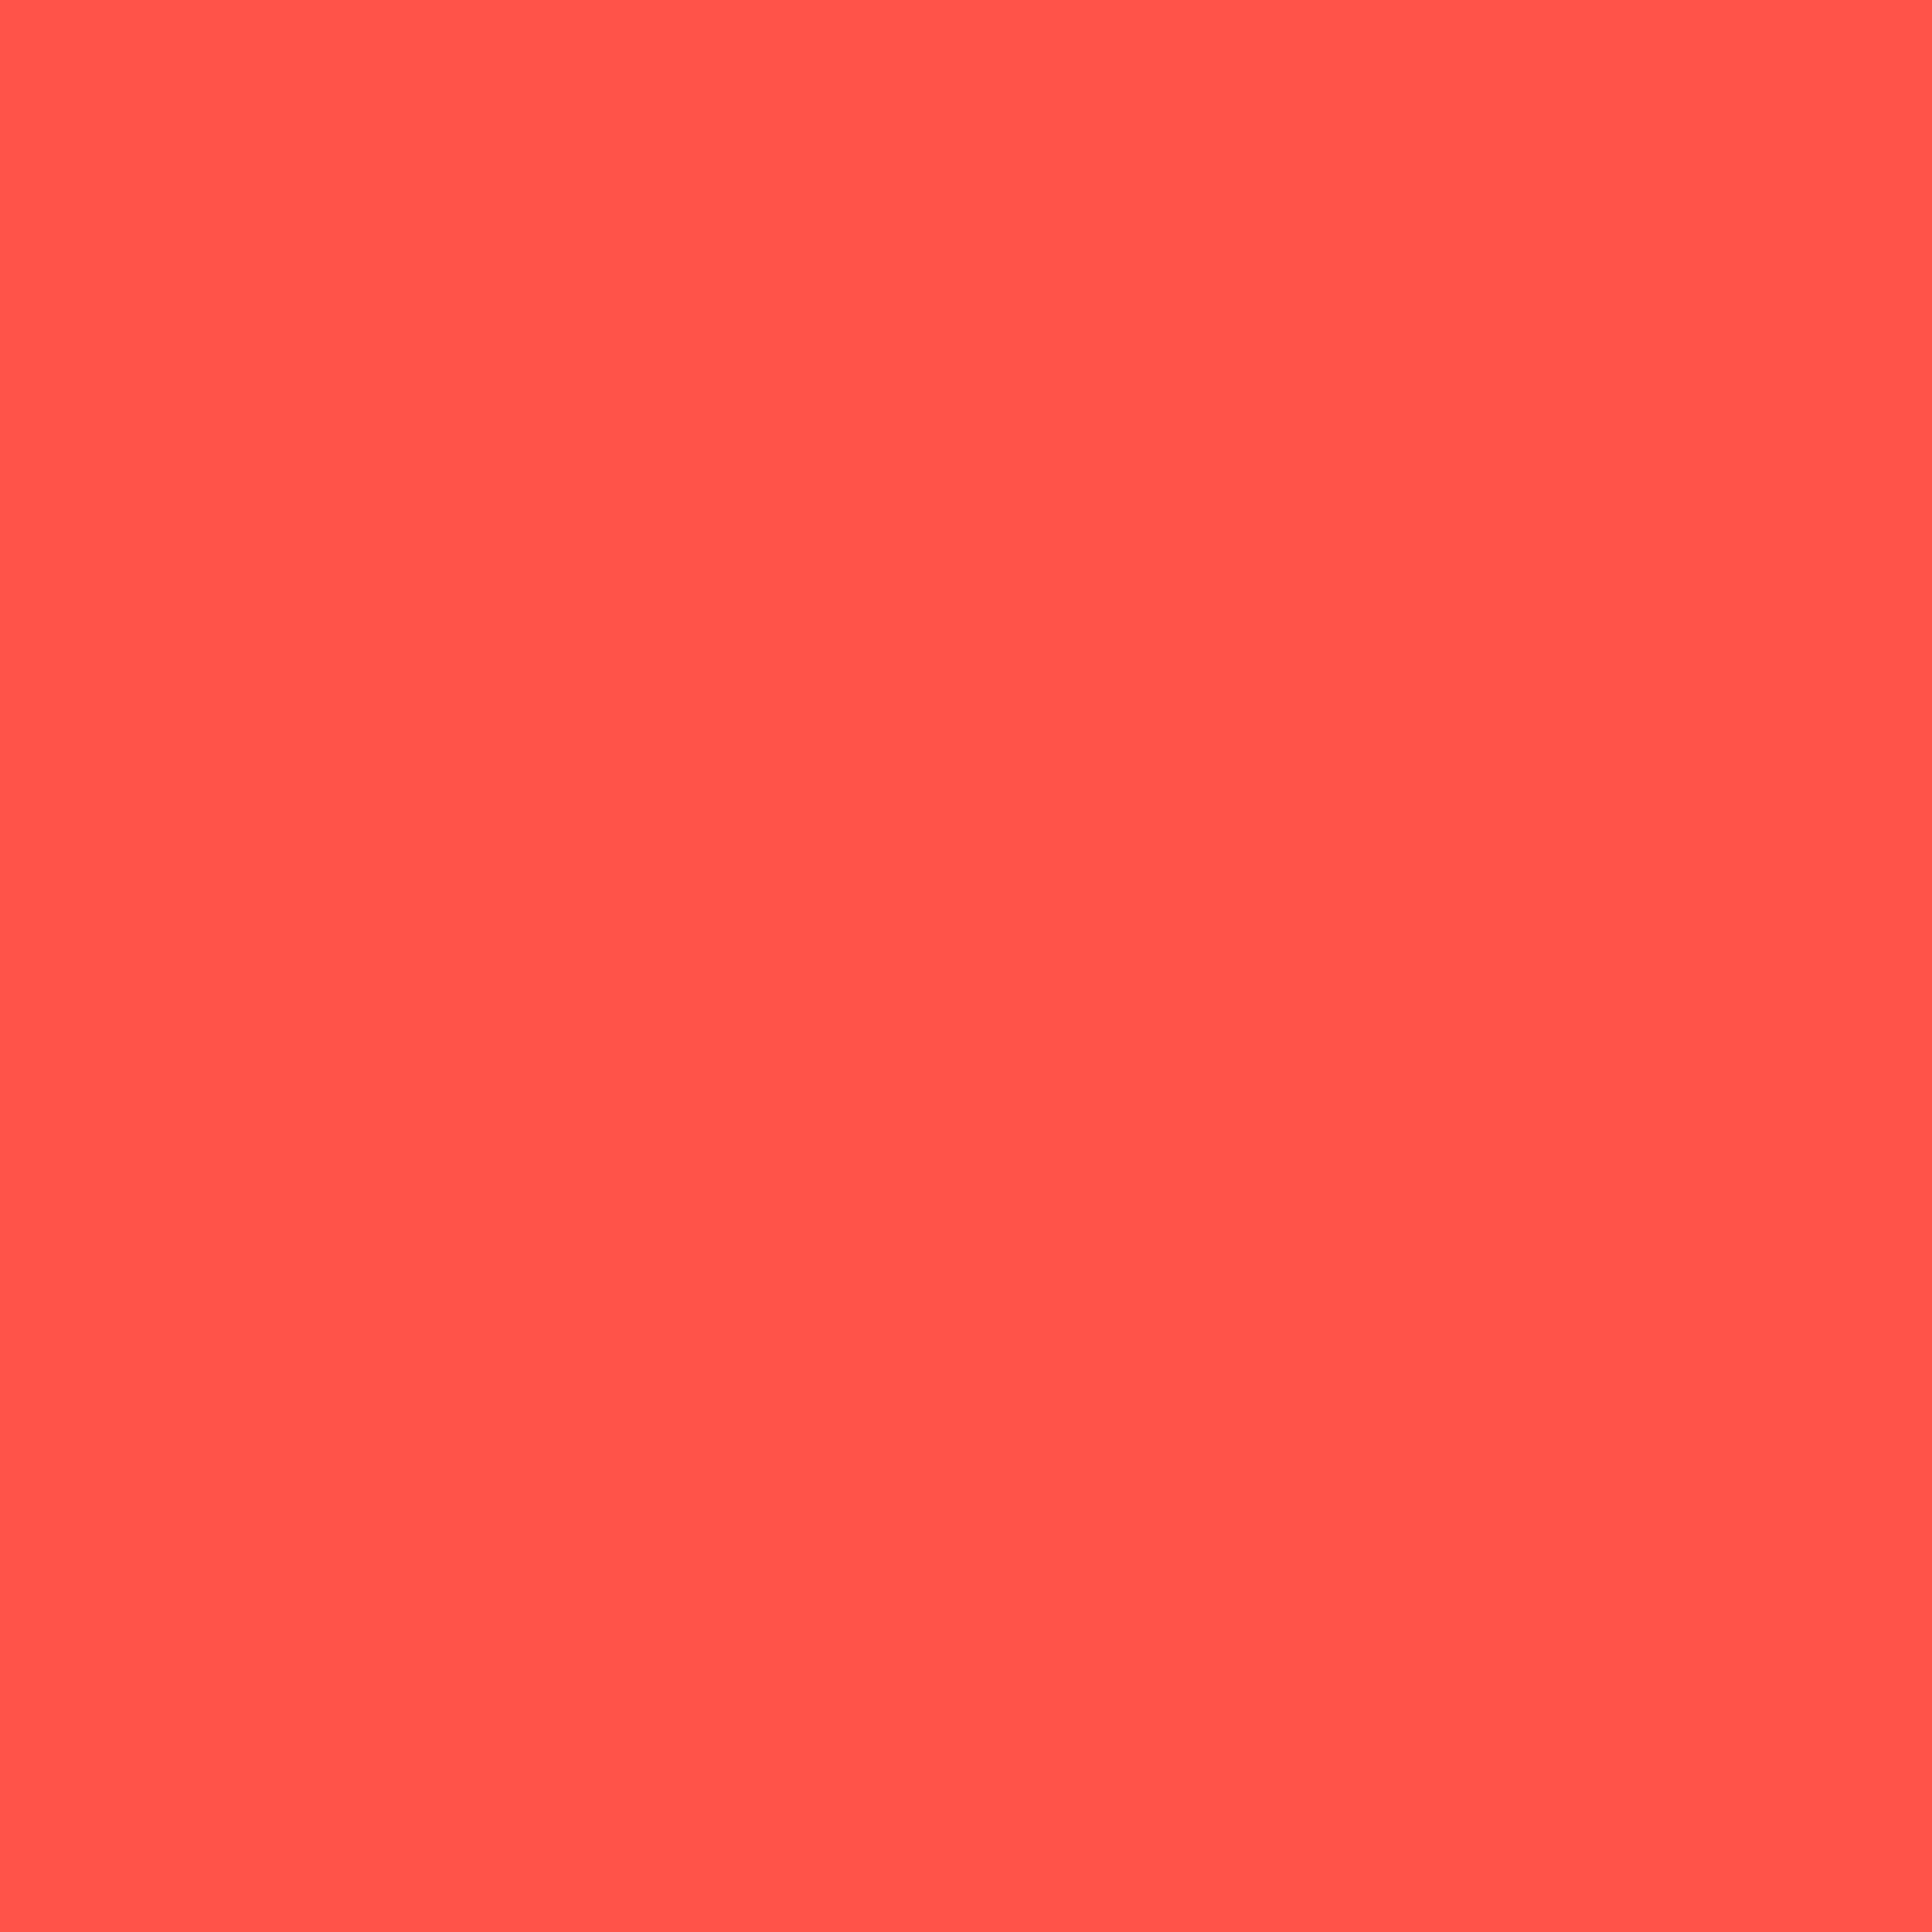 3600x3600 Red-orange Solid Color Background